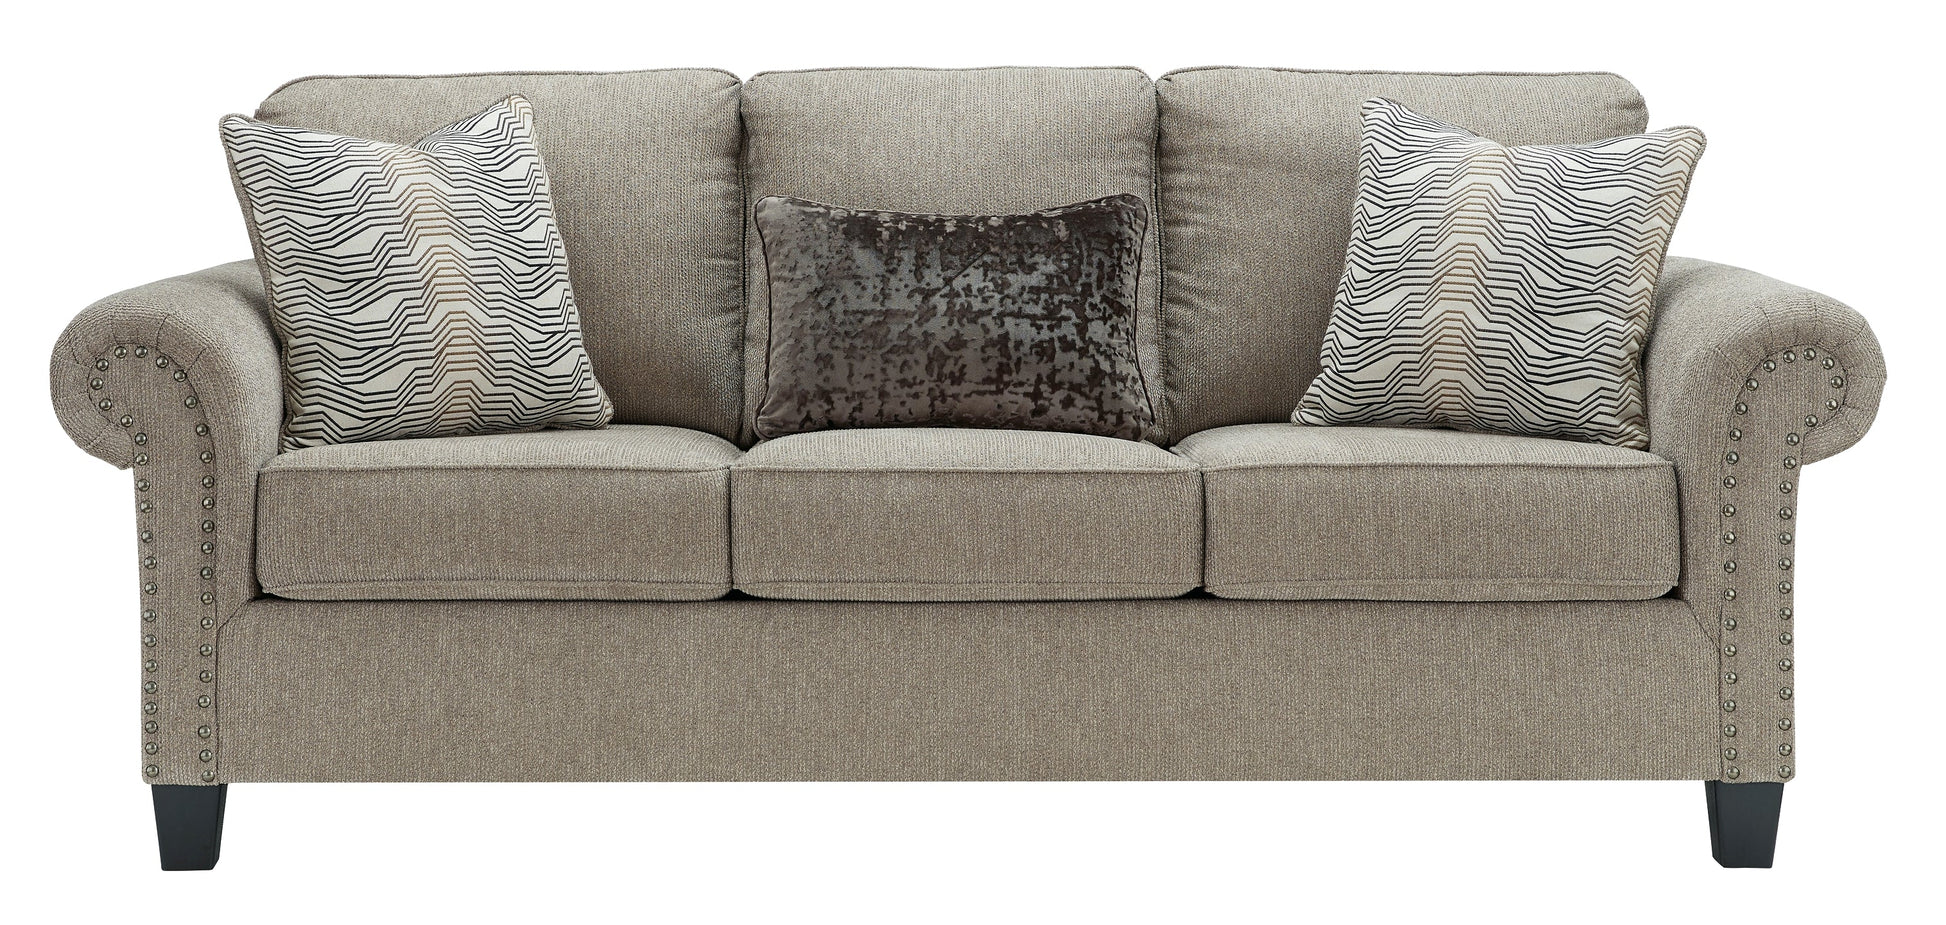 Shewsbury Sofa at Cloud 9 Mattress & Furniture furniture, home furnishing, home decor